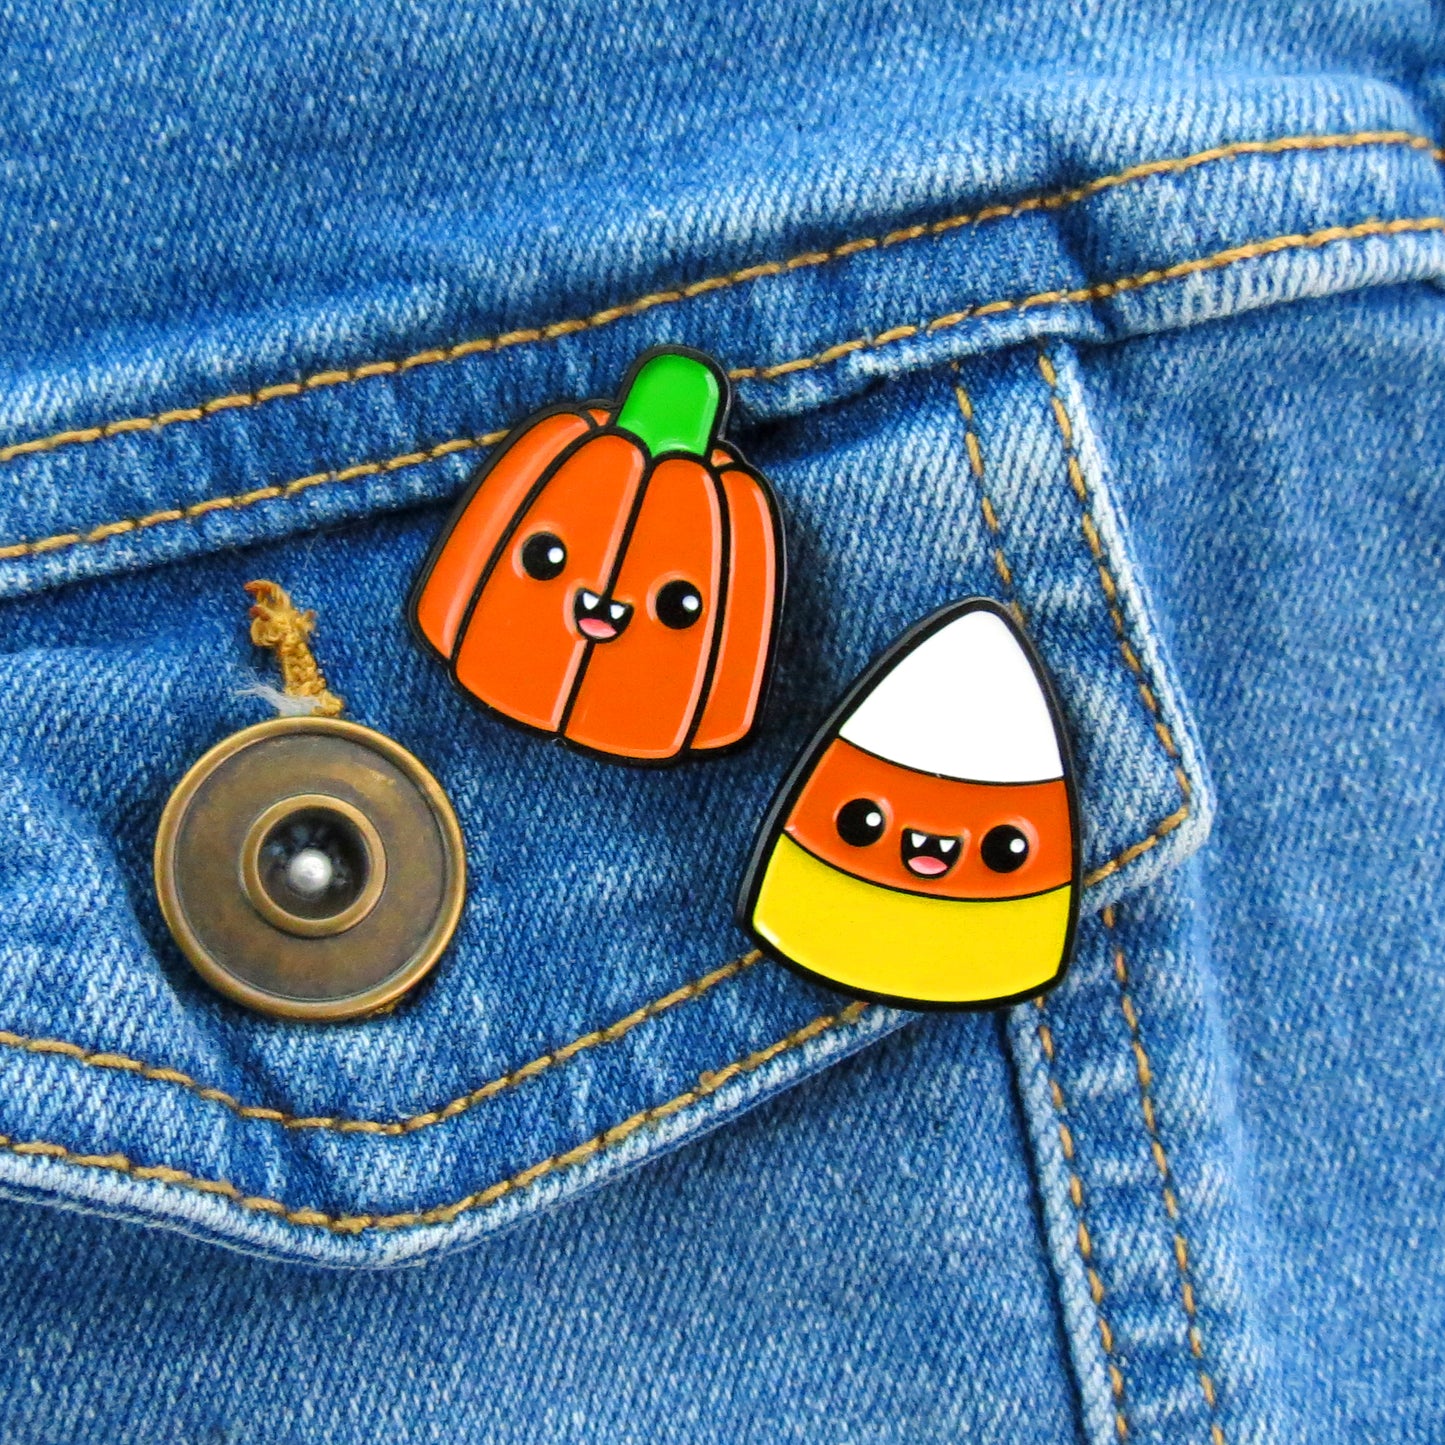 Halloween Pumpkin and Candy Corn enamel pin set on jean jacket pocket